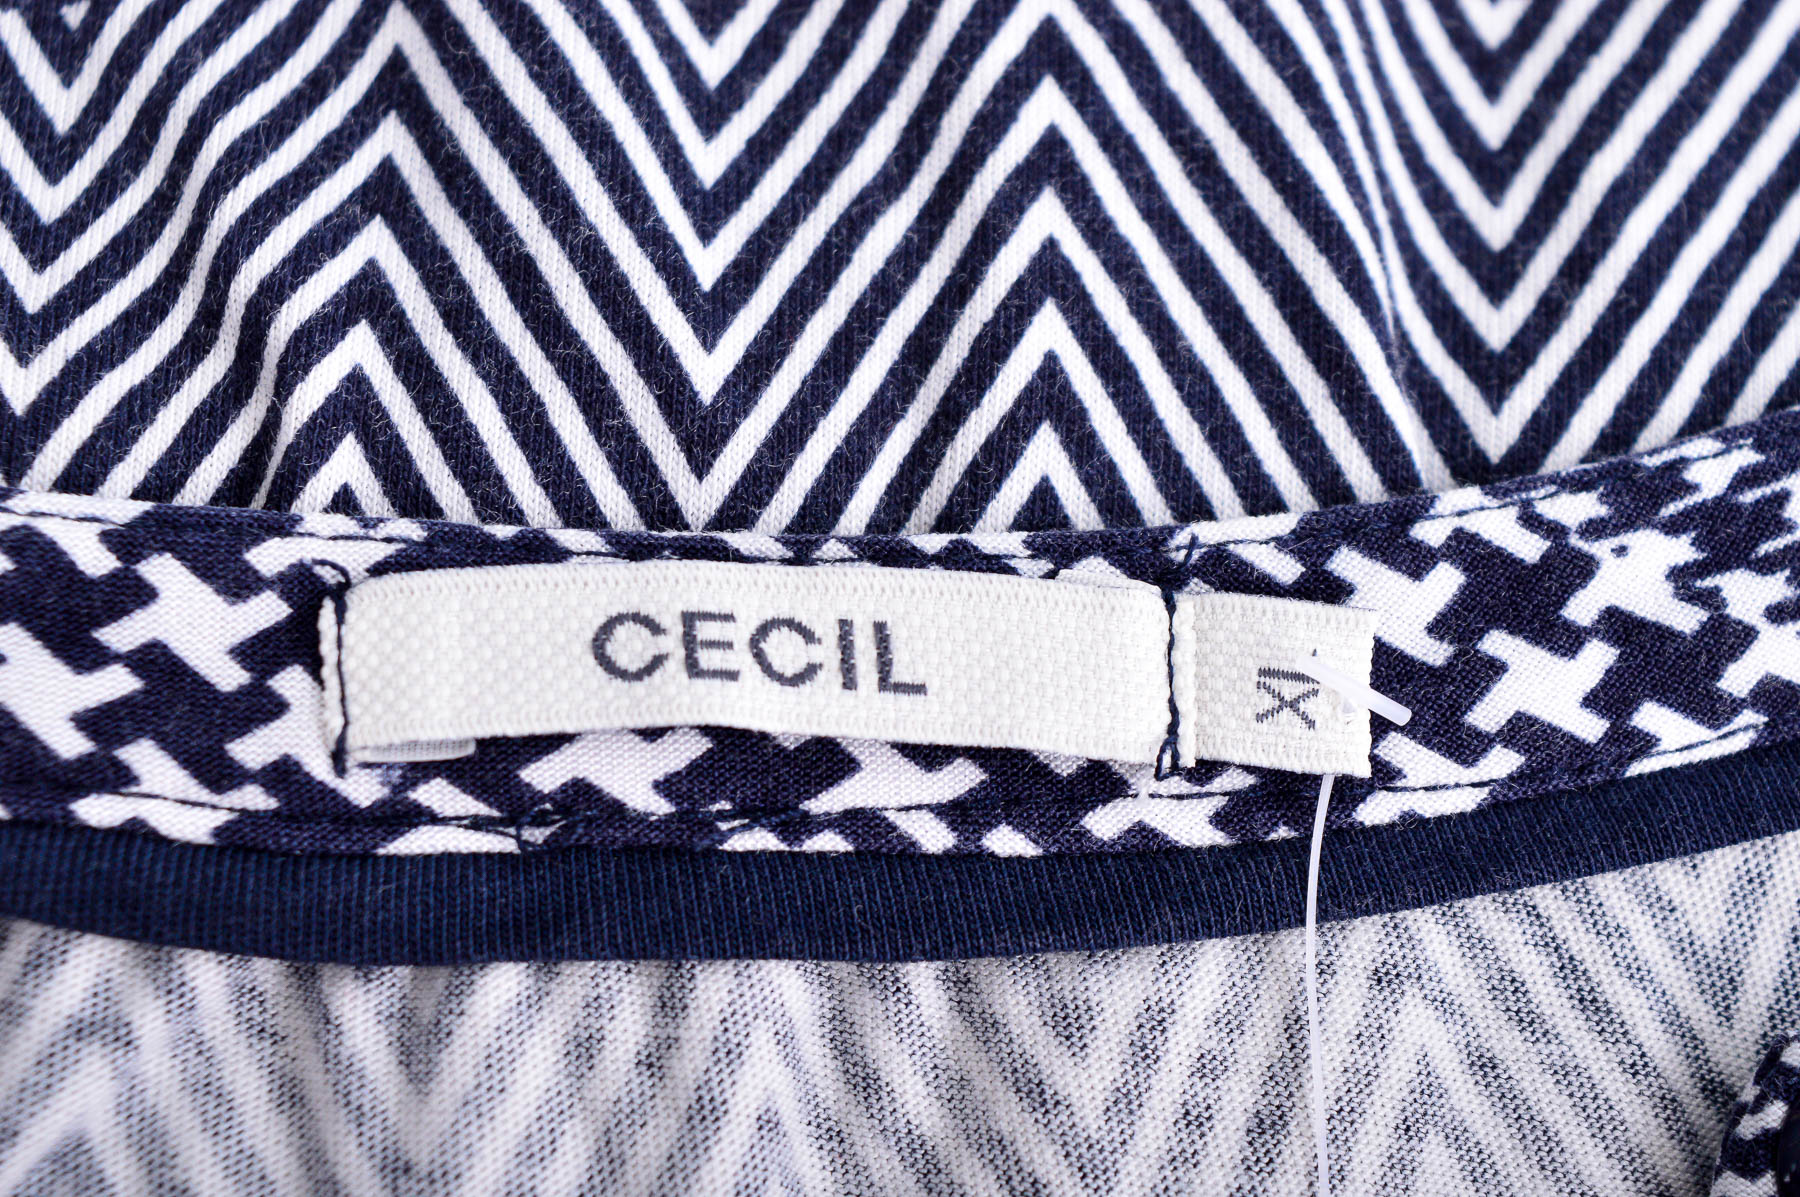 Дамска блуза - CECIL - 2